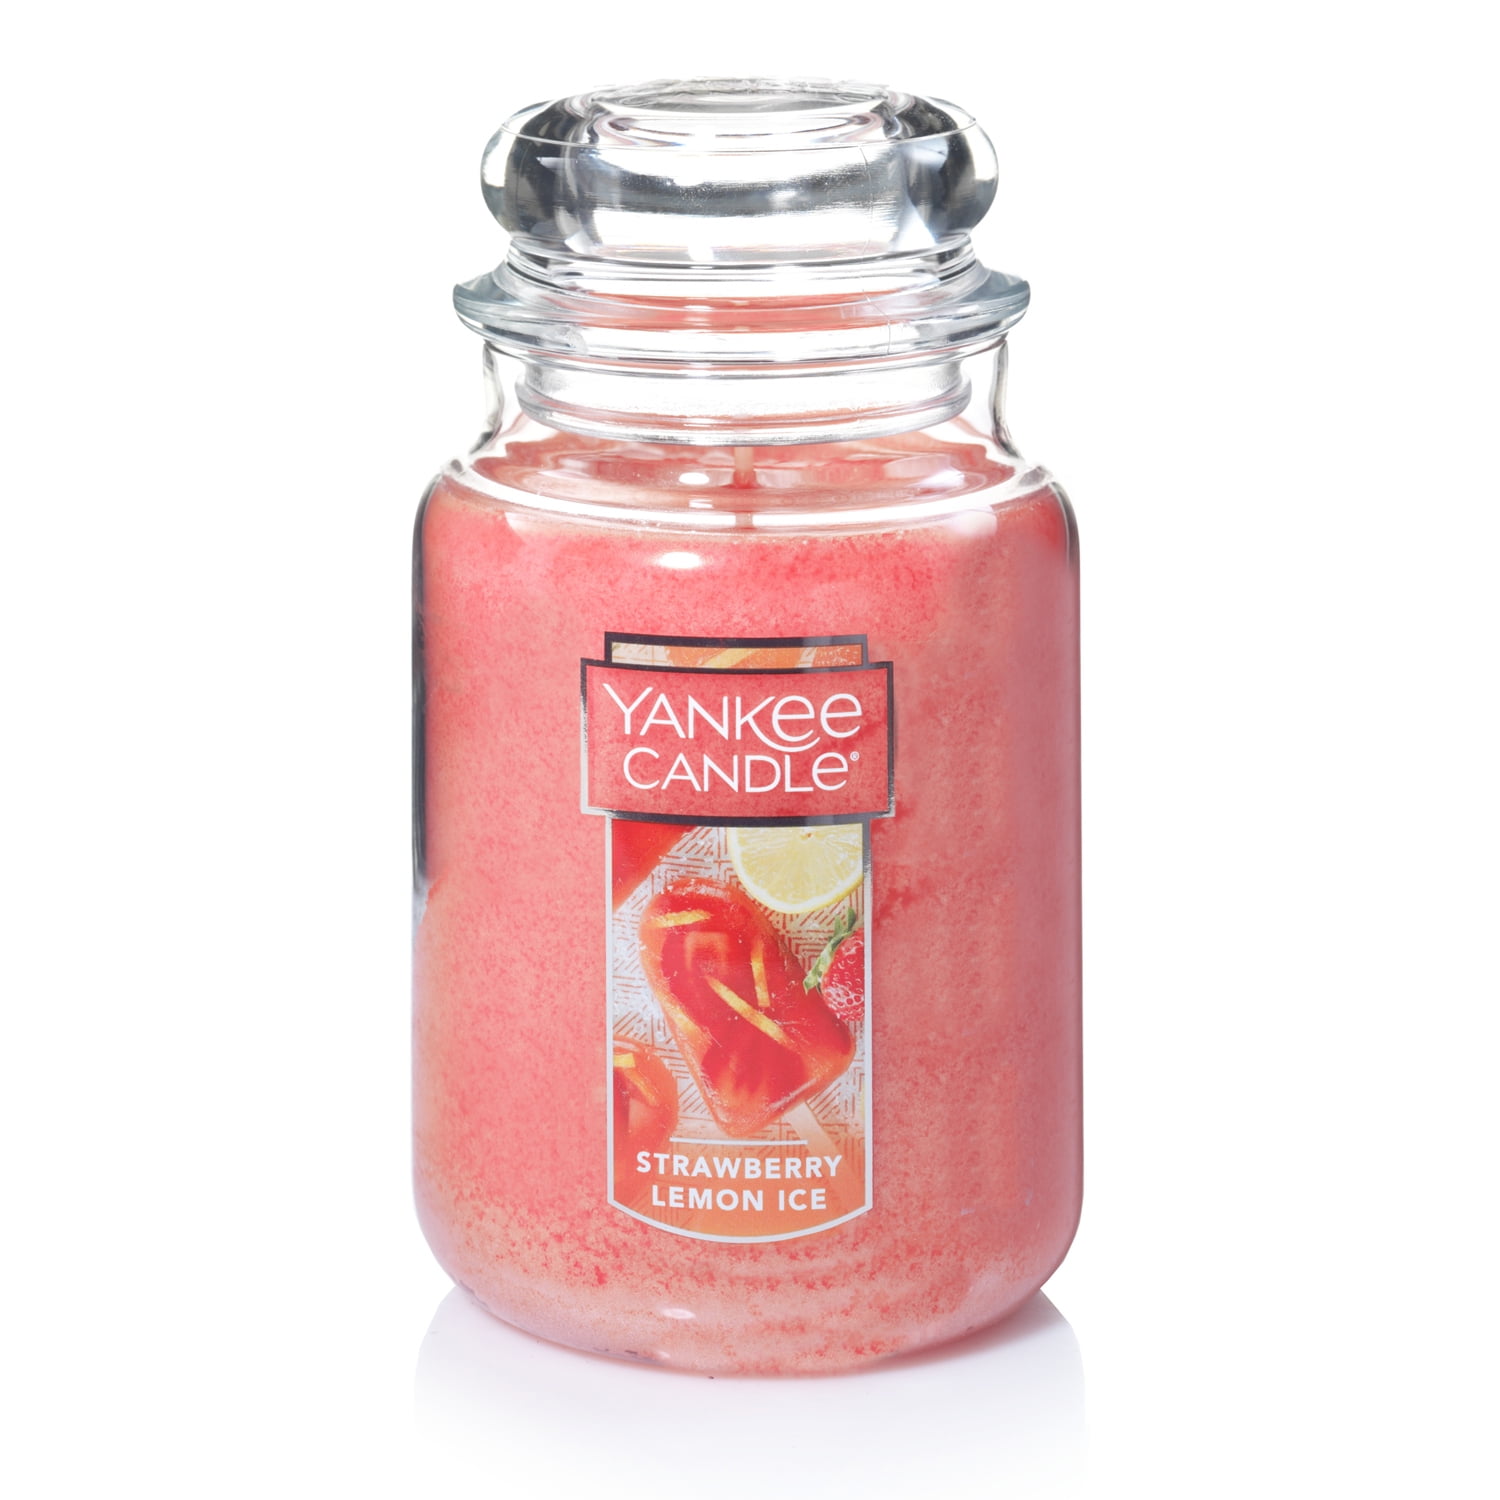 Yankee Candle Strawberry Lemon Ice - Original Large Jar Scented Candle 